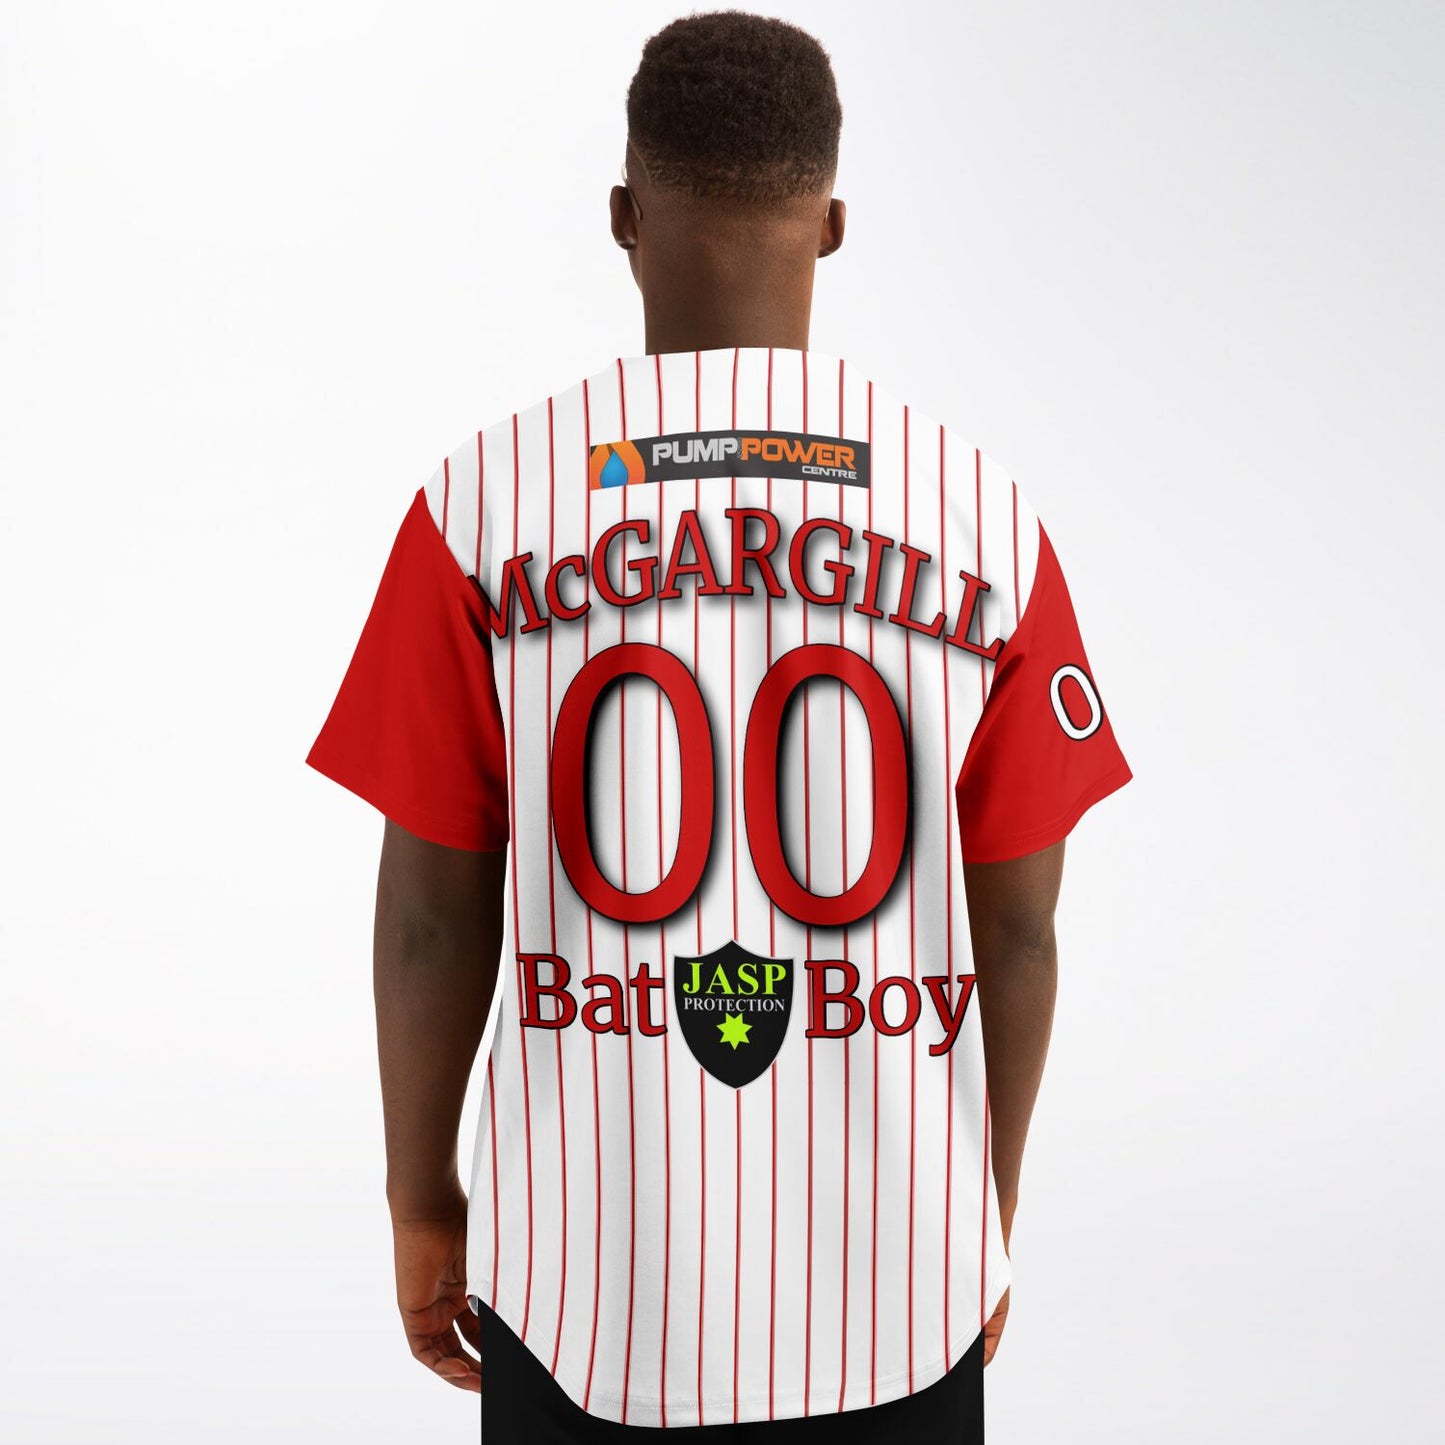 Logan McGargill #00 Demons Bat Boy Baseball Jersey - Home